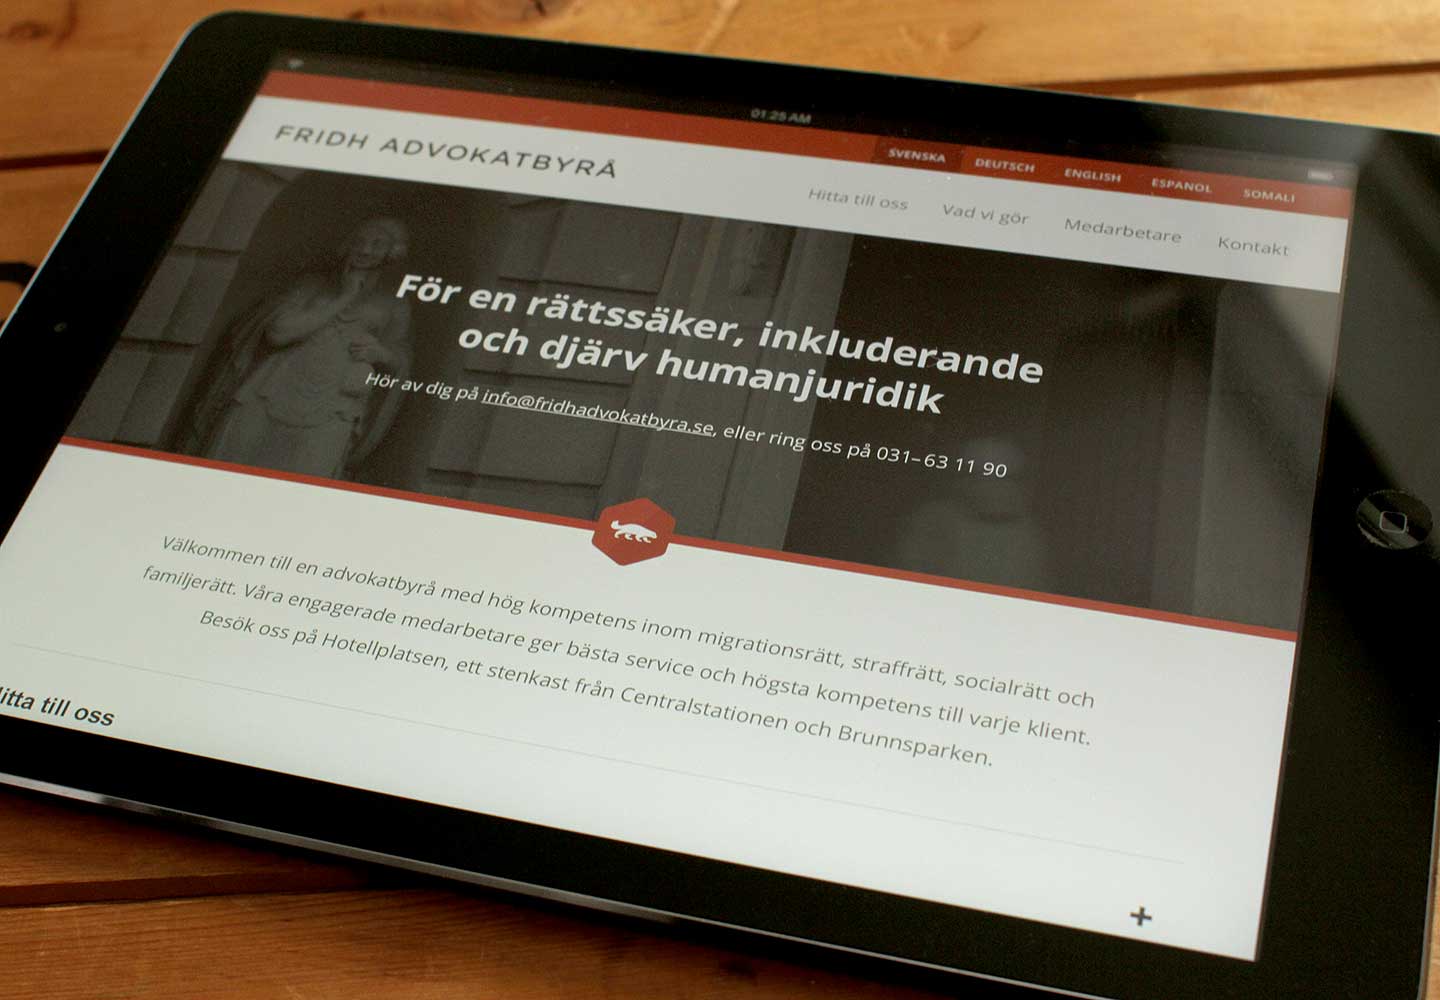 Bild från fridhadvokatbyra.se